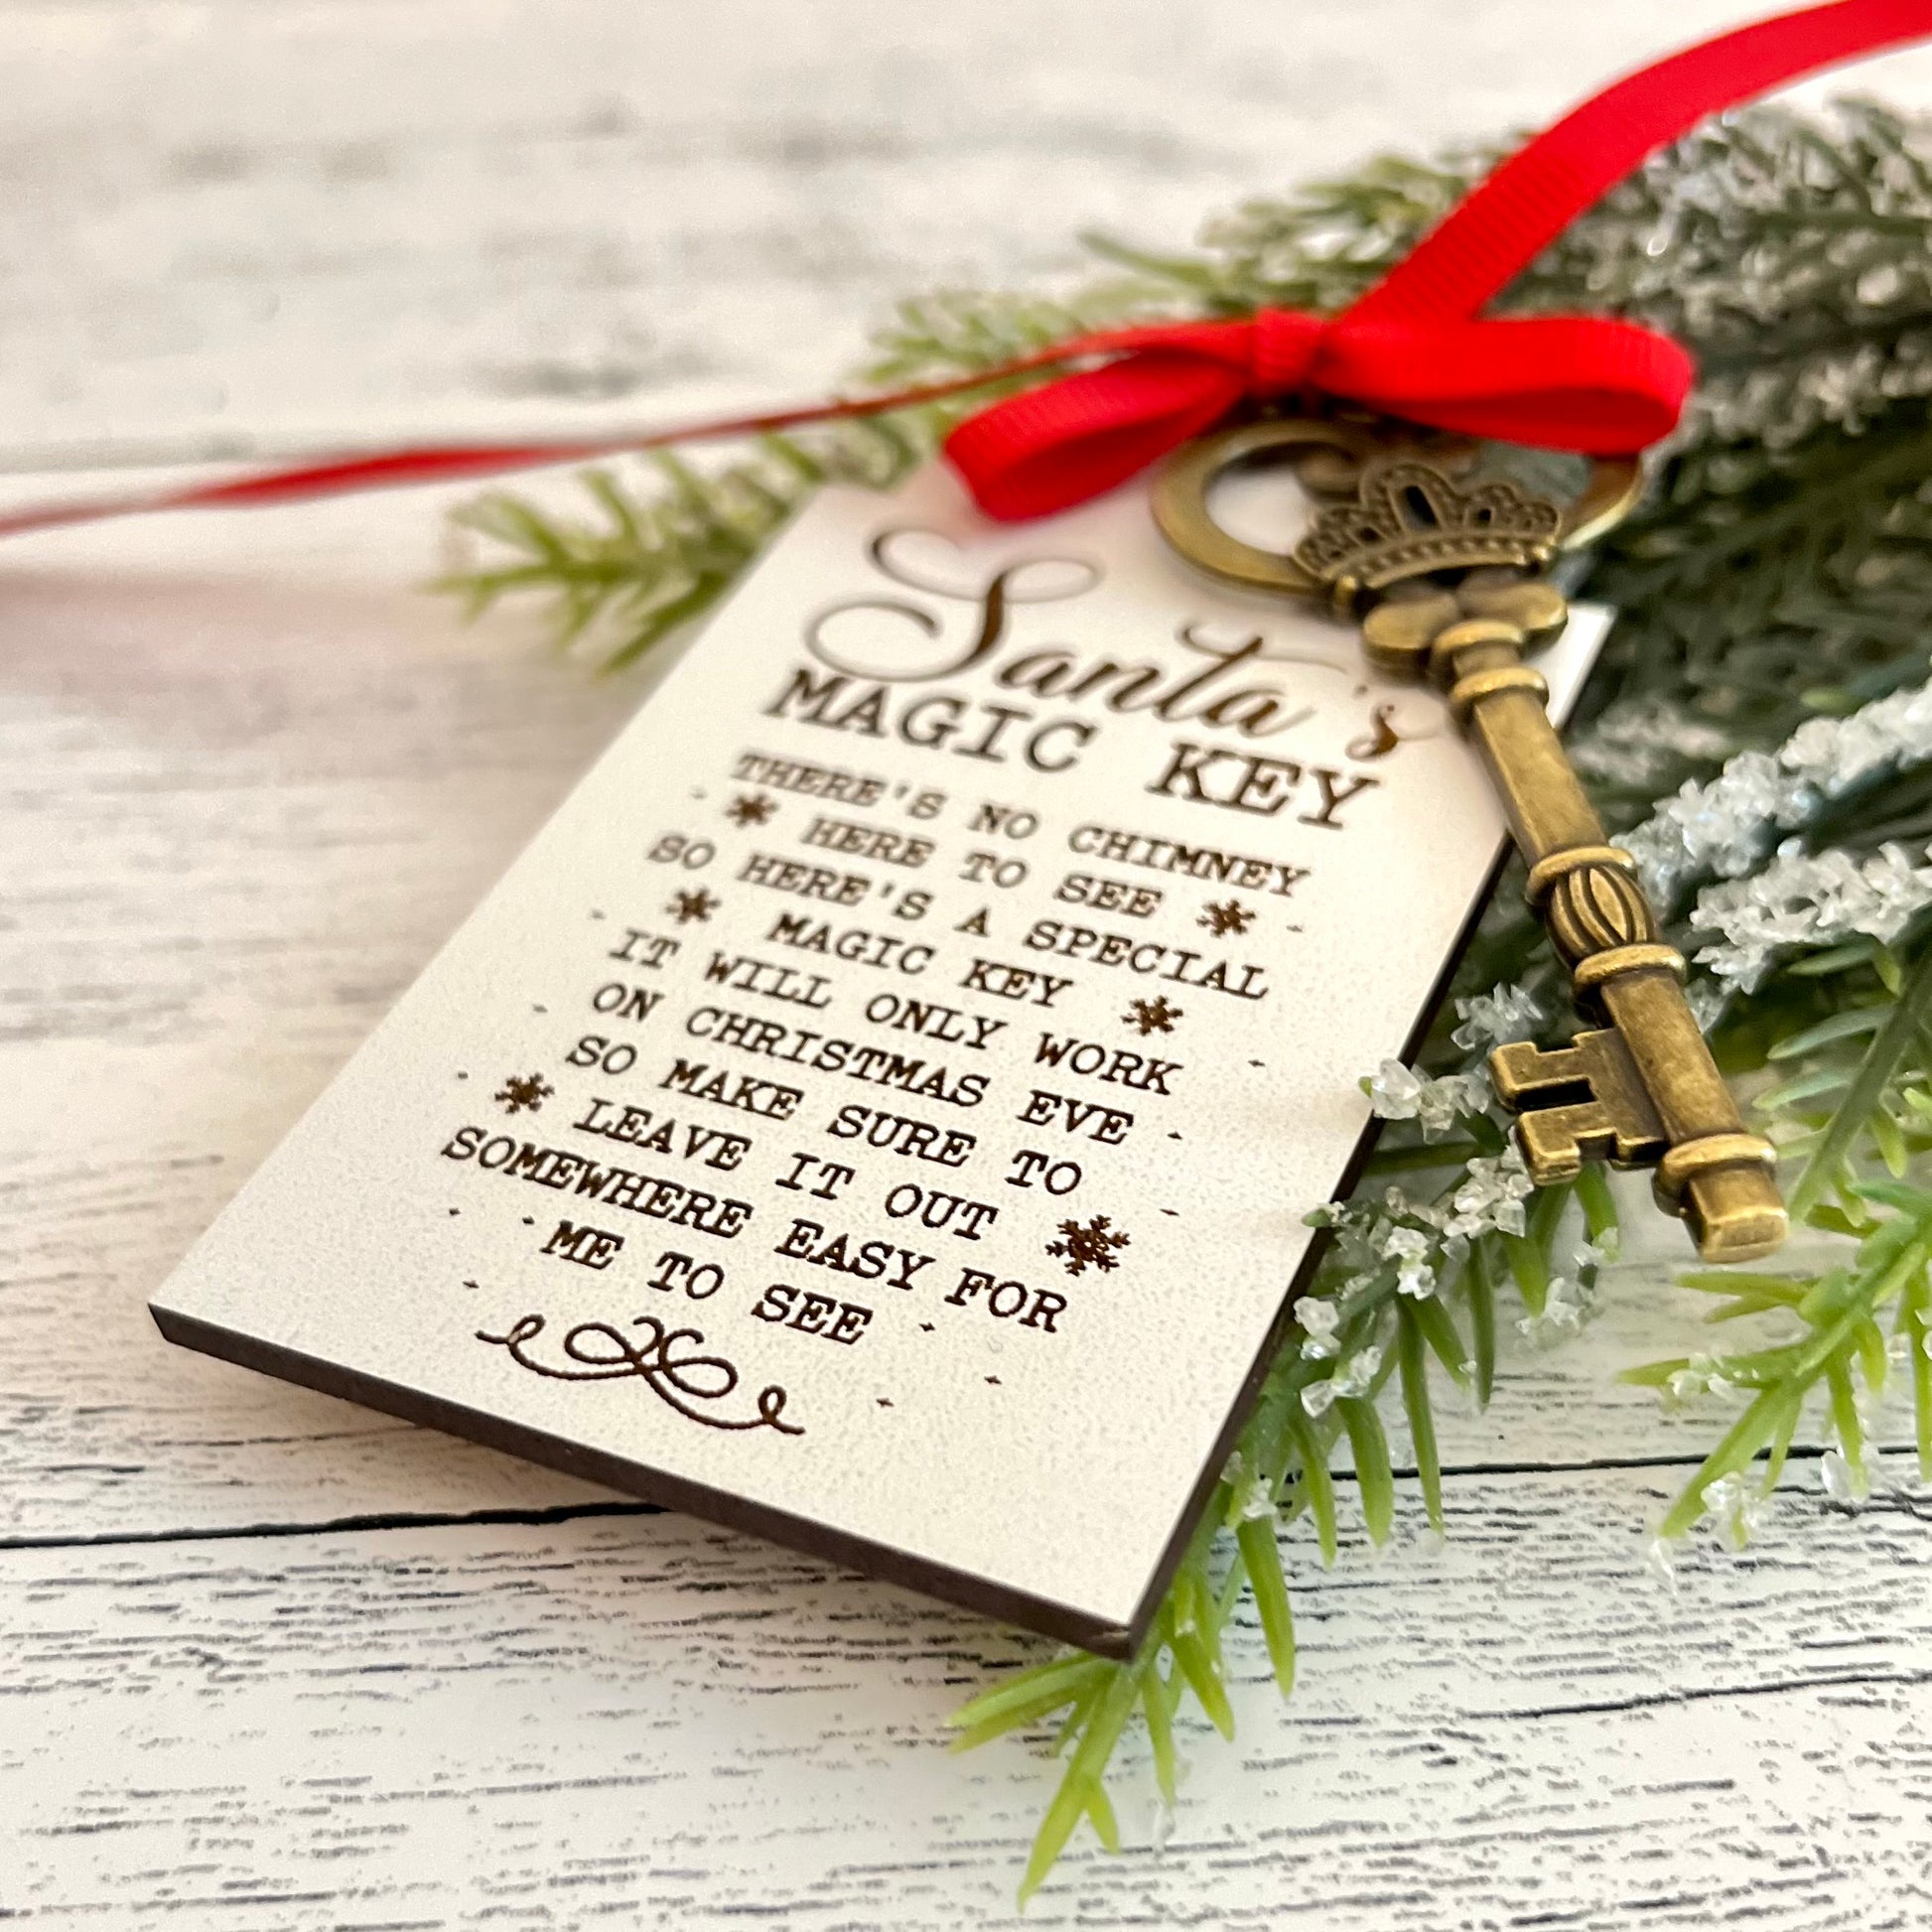 Santas Magic Key - Christmas Gift - Plaque with Poem